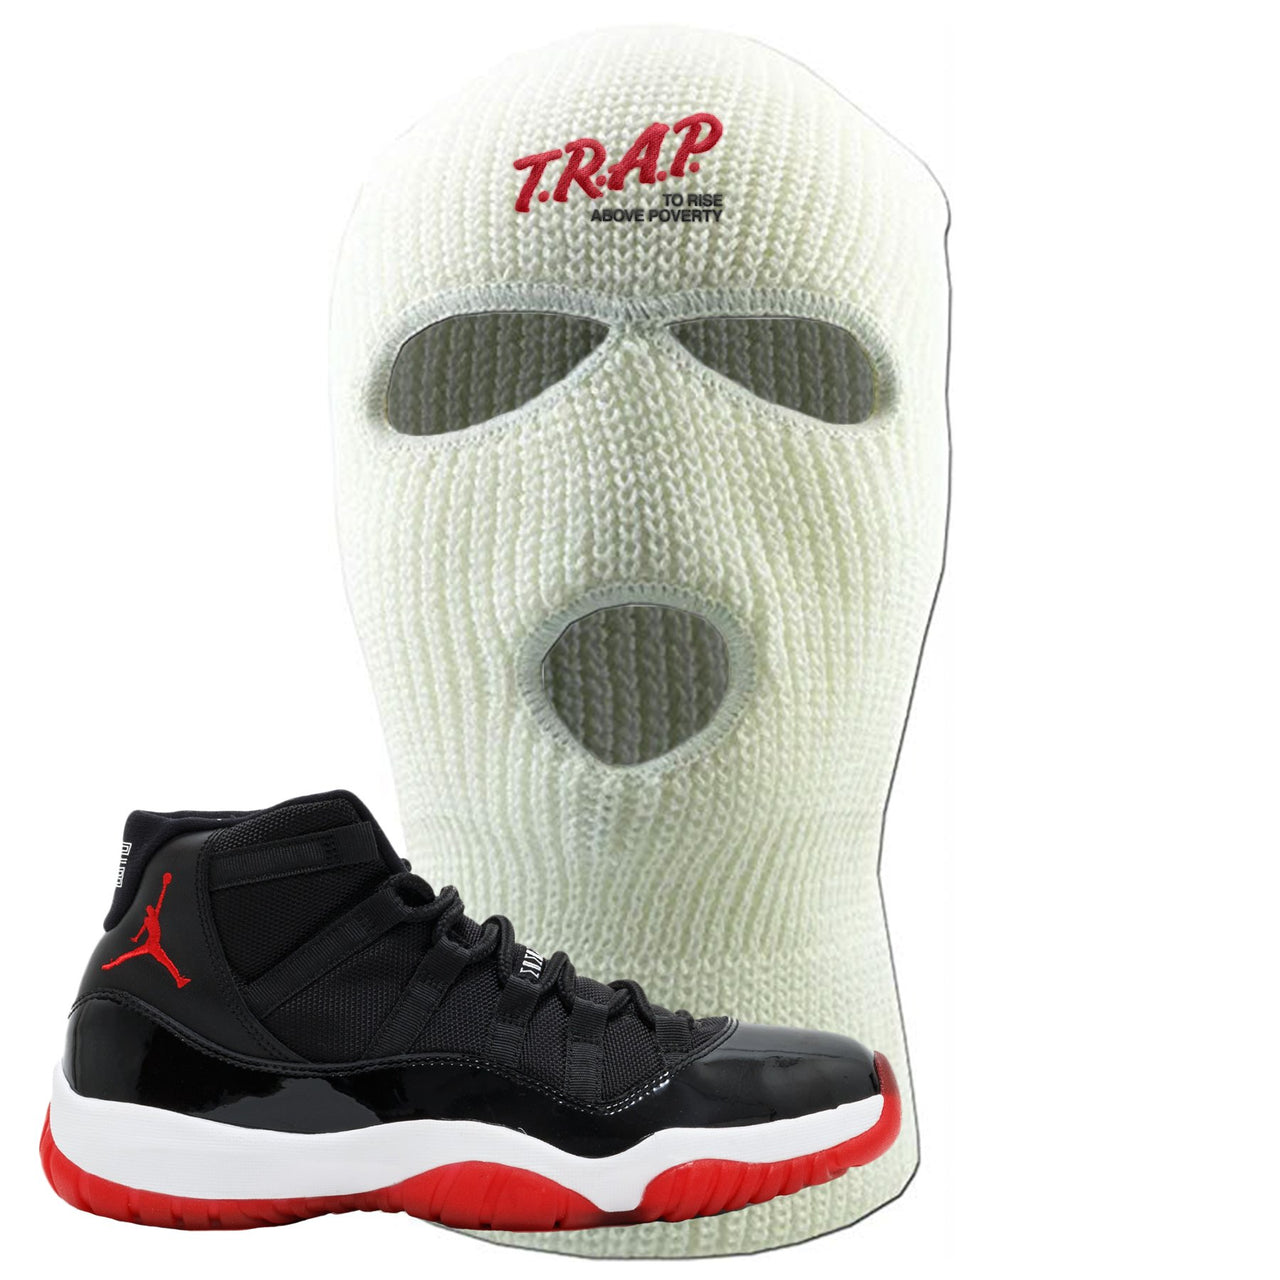 Jordan 11 Bred Trap To Rise Above Poverty White Sneaker Hook Up Ski Mask